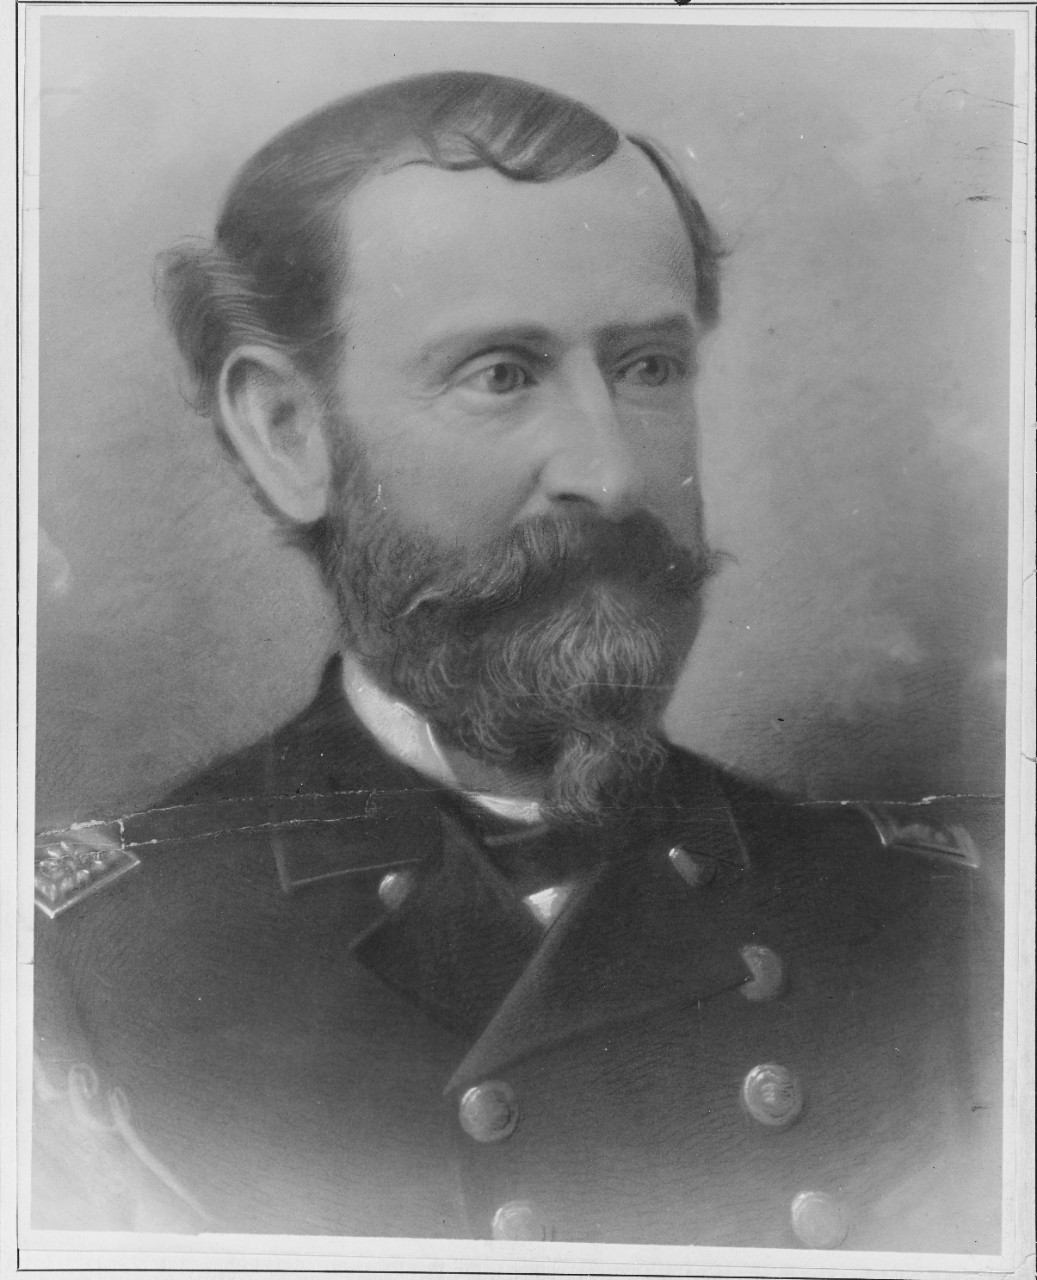 Commander Winfield Scott Schley, USN.